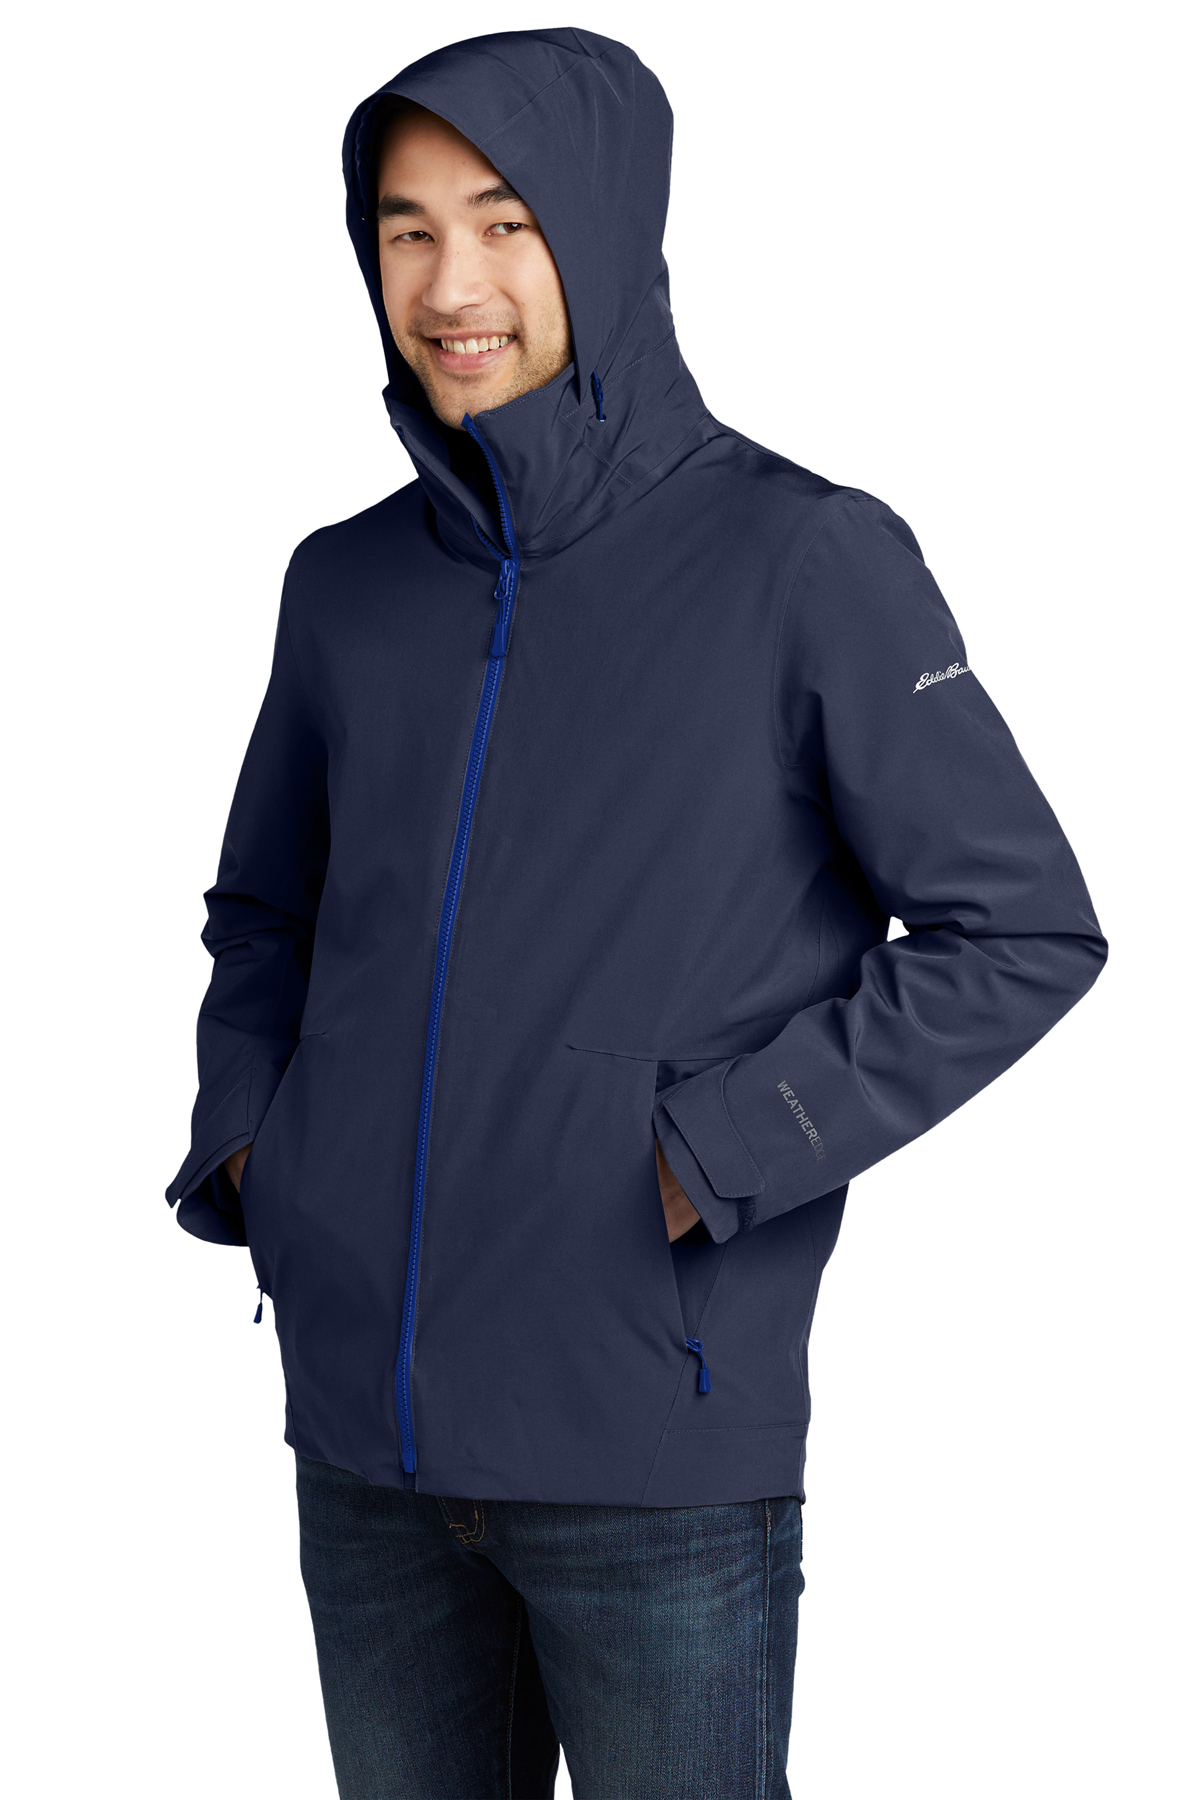 Eddie Bauer WeatherEdge 3-in-1 Jacket | Product | SanMar